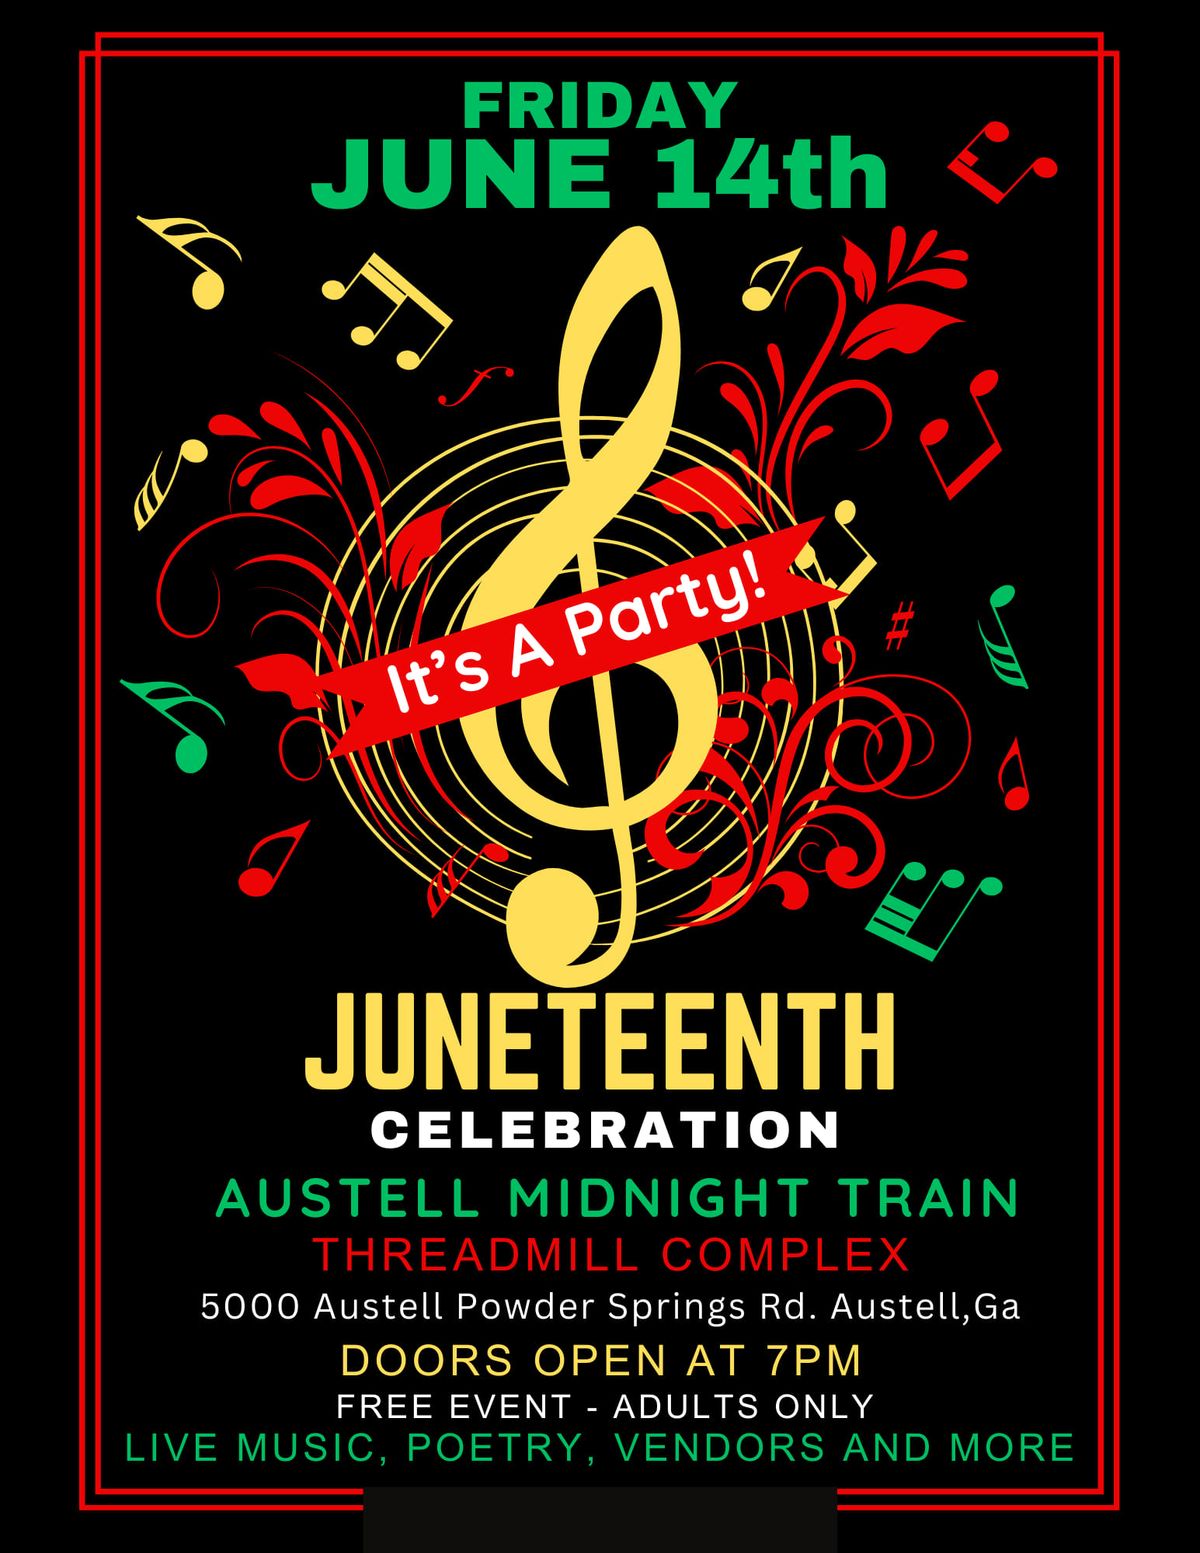 Austell Midnight Train - A Juneteenth Celebration 